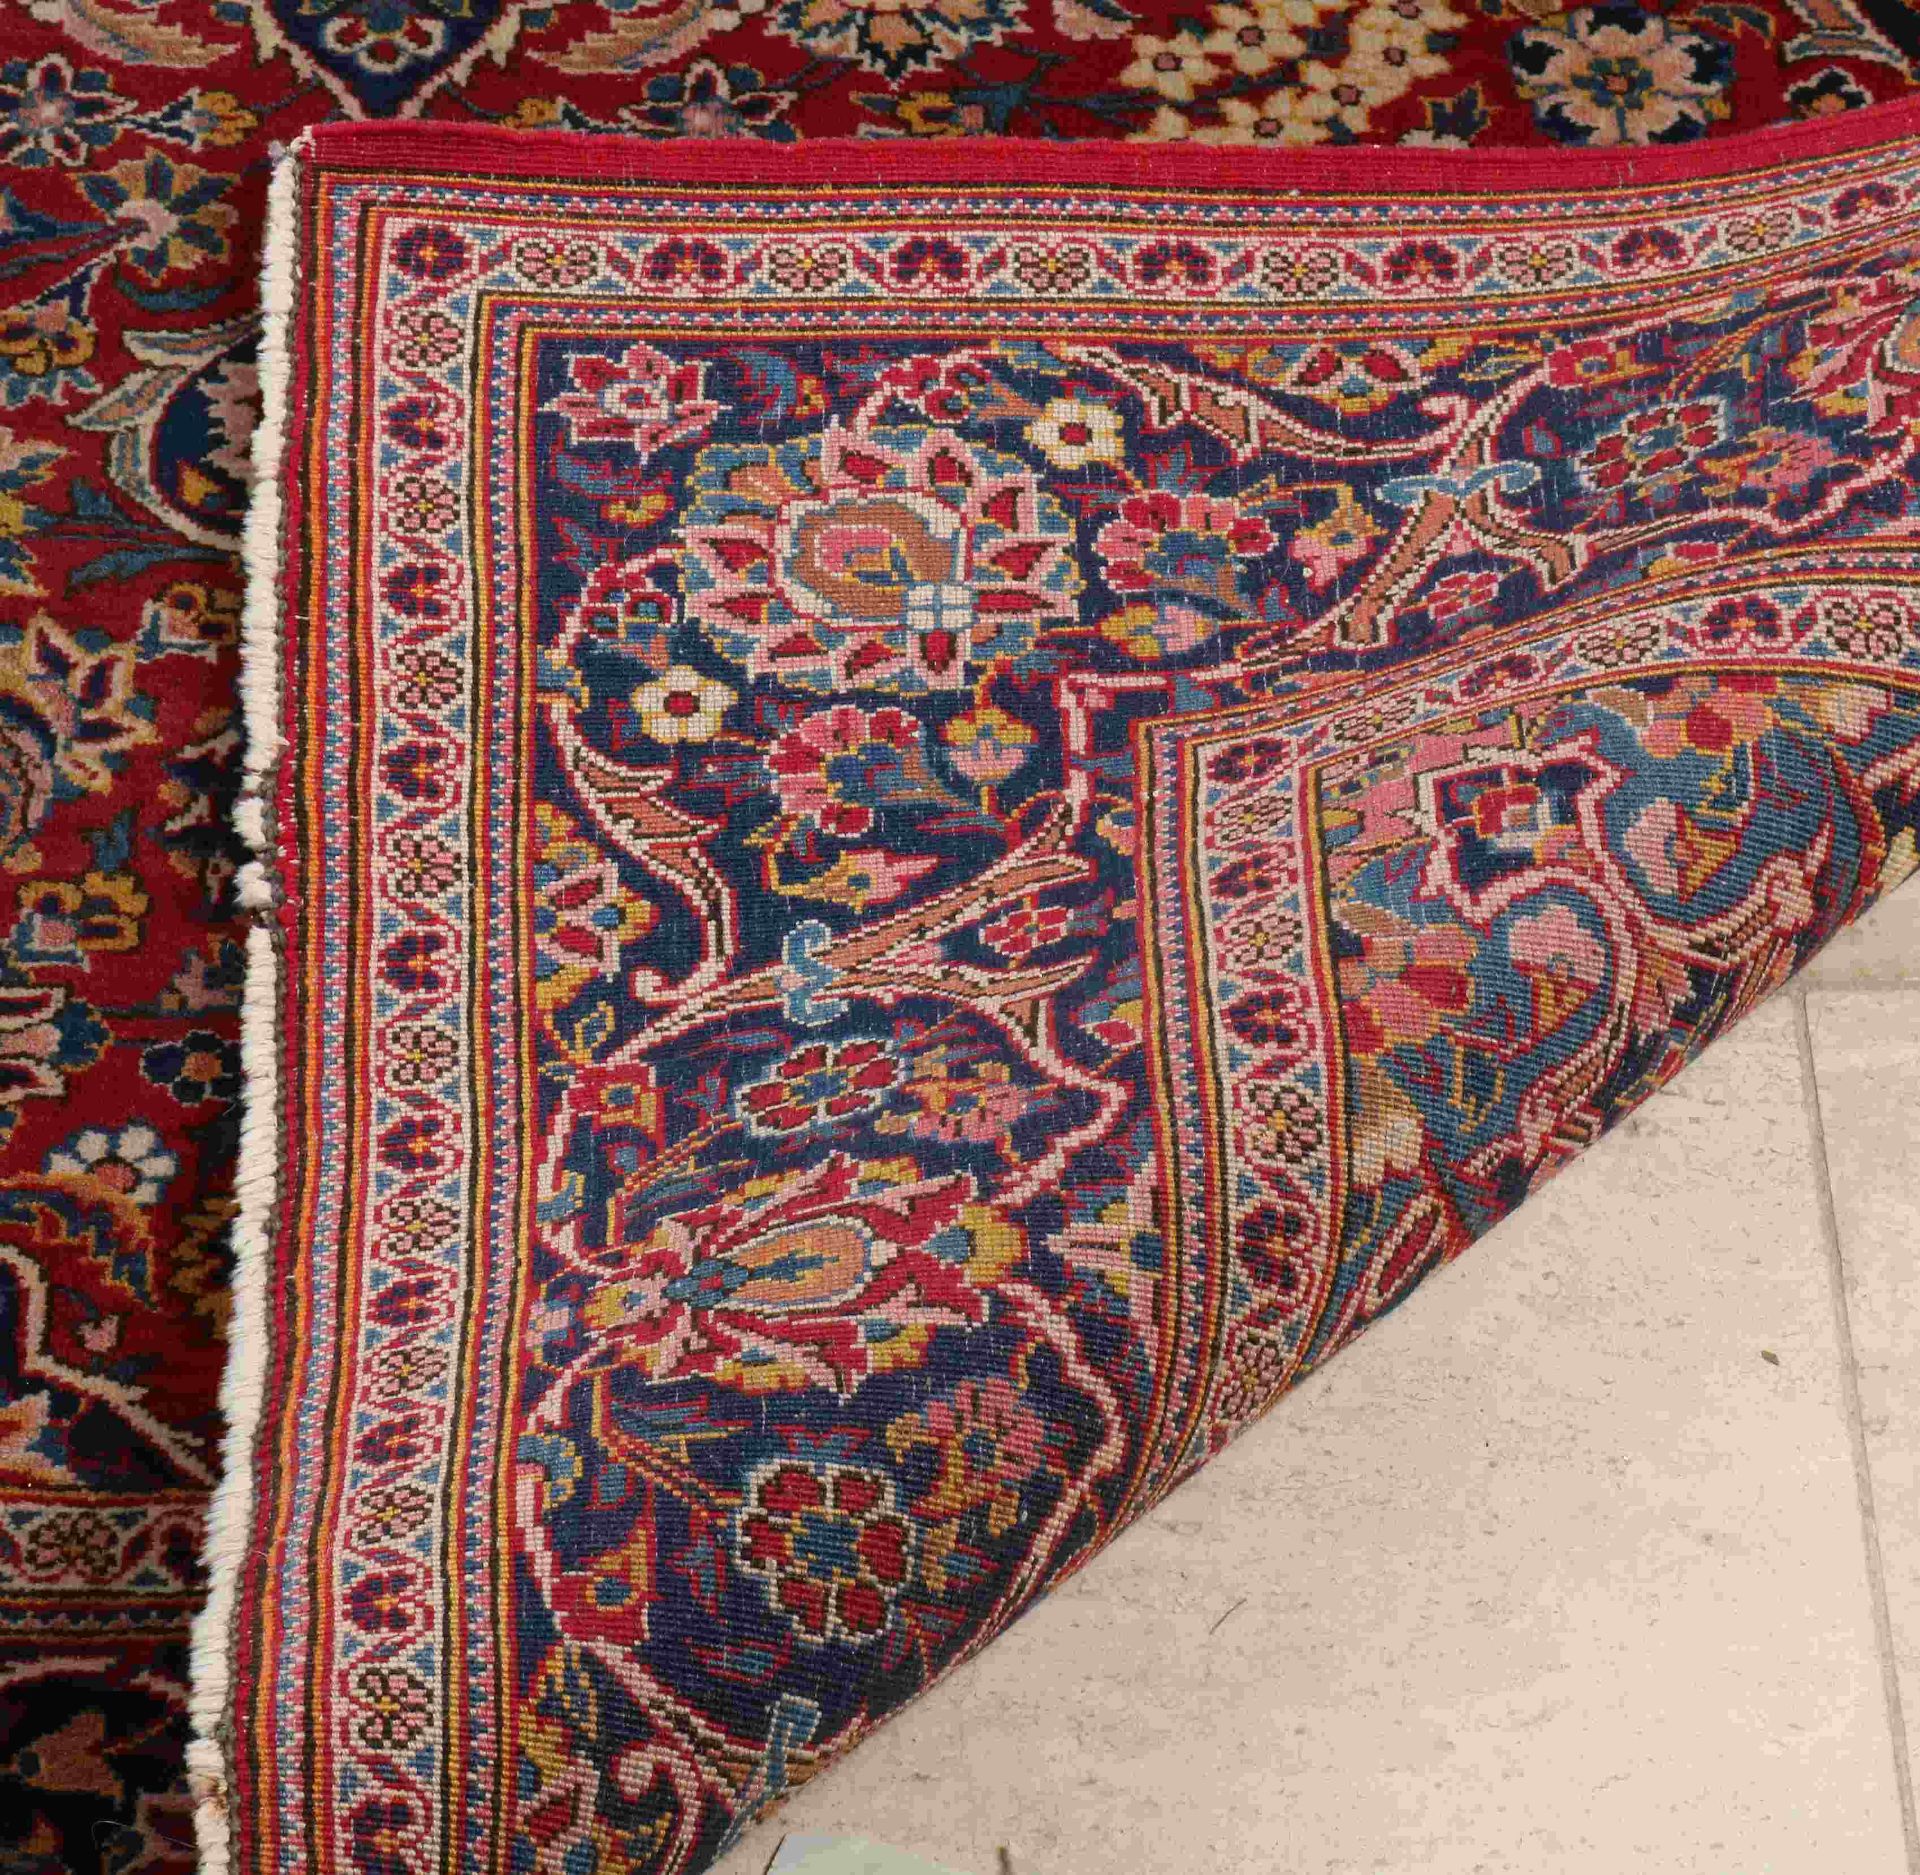 Persian rug, 198 x 137 cm. - Image 3 of 3